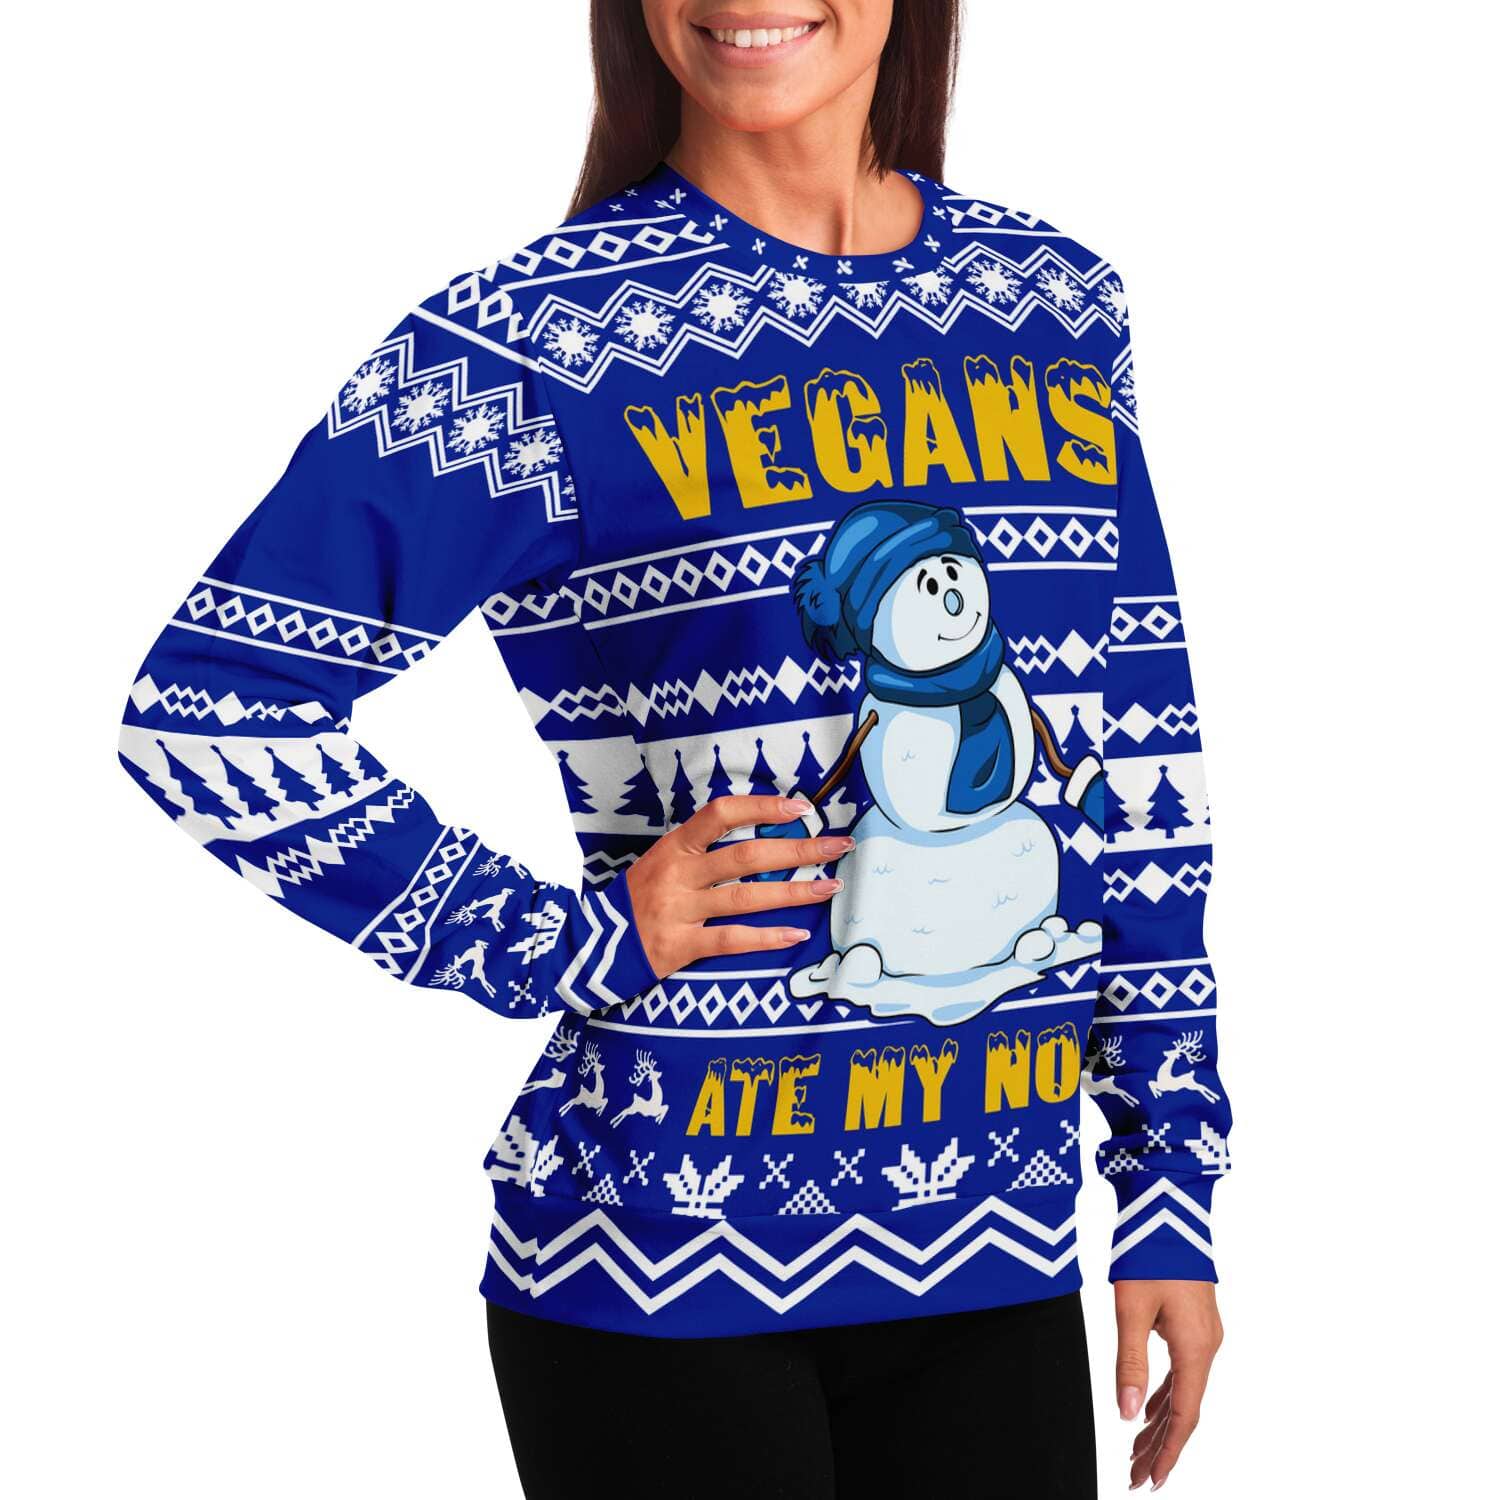 SUBLIMINATOR Vegans Ate My Nose Ugly Christmas Sweater Sweatshirt